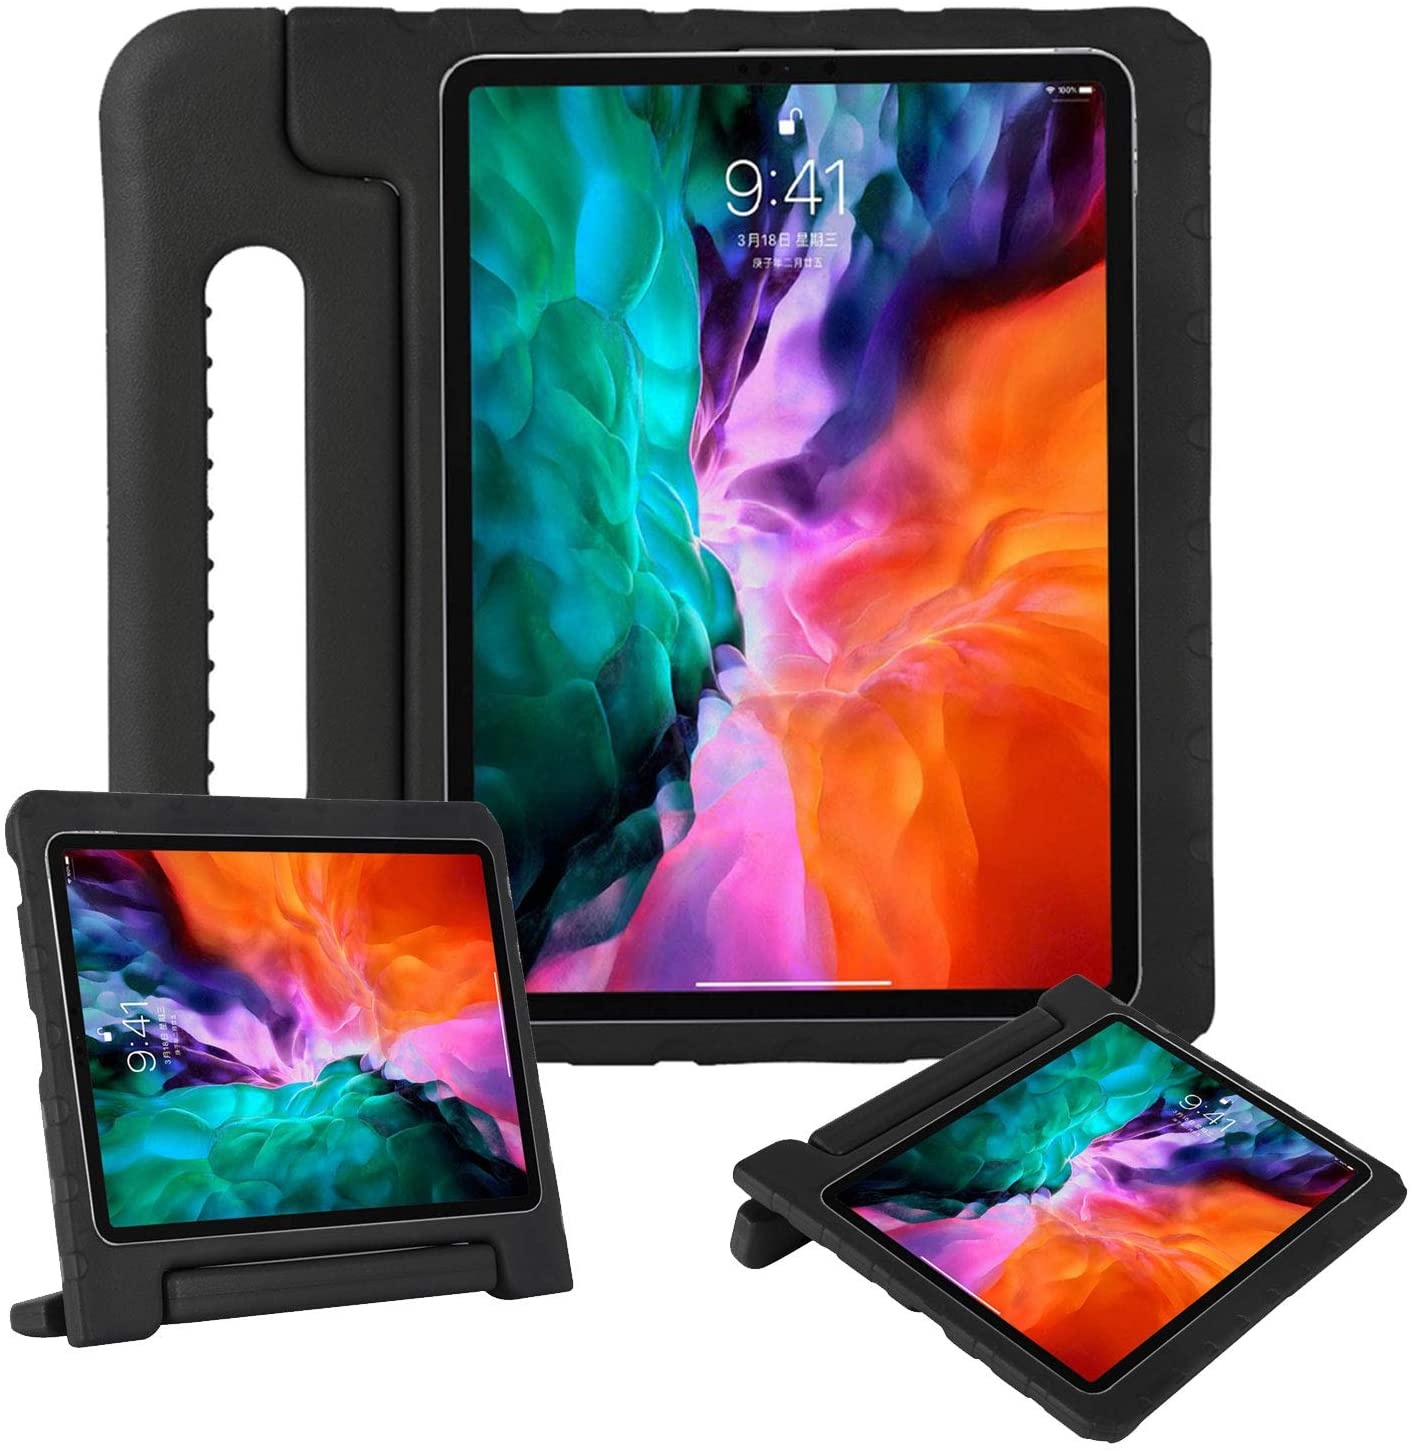 IJver In beweging incompleet iPad Pro 12,9 Inch 2020 & 2021 kinderhoes Zwart - iPadspullekes